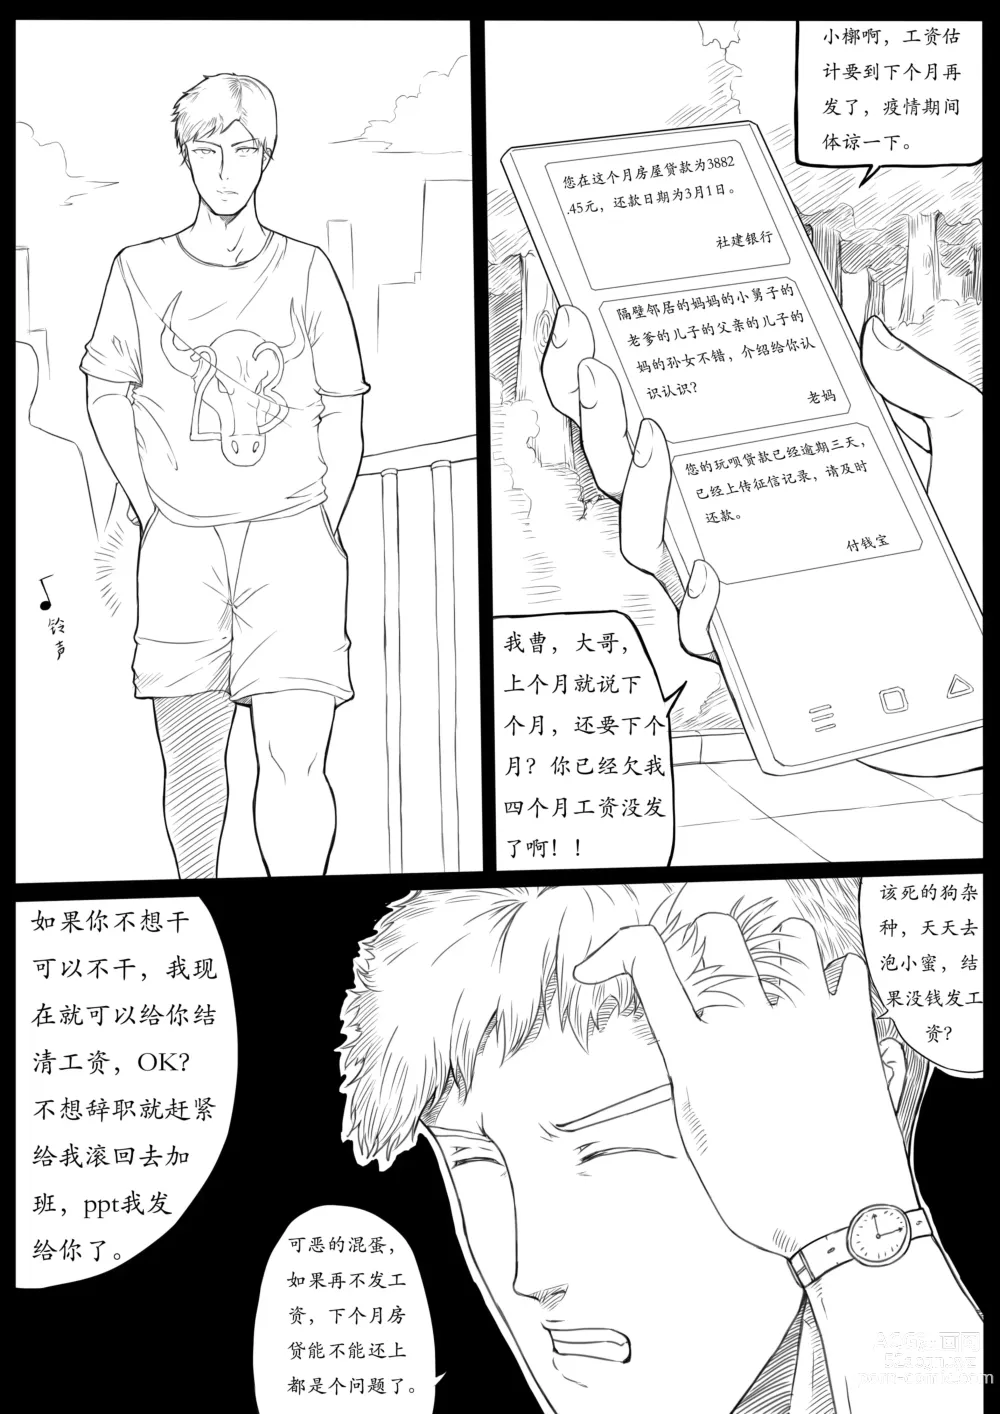 Page 4 of doujinshi 暗黑西游记第一集 V1 & V2